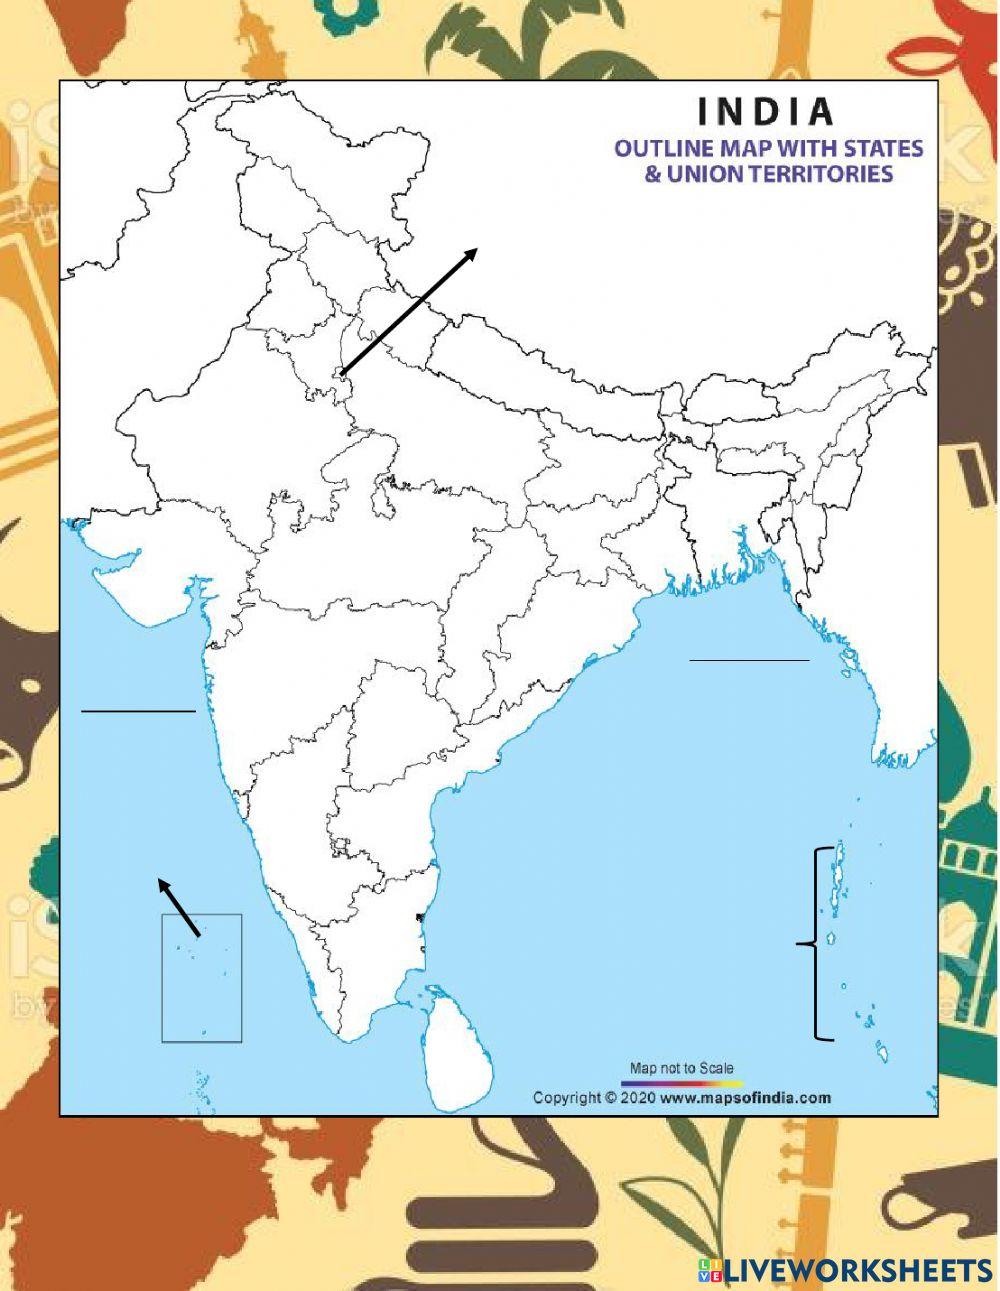 Map Skills (India)